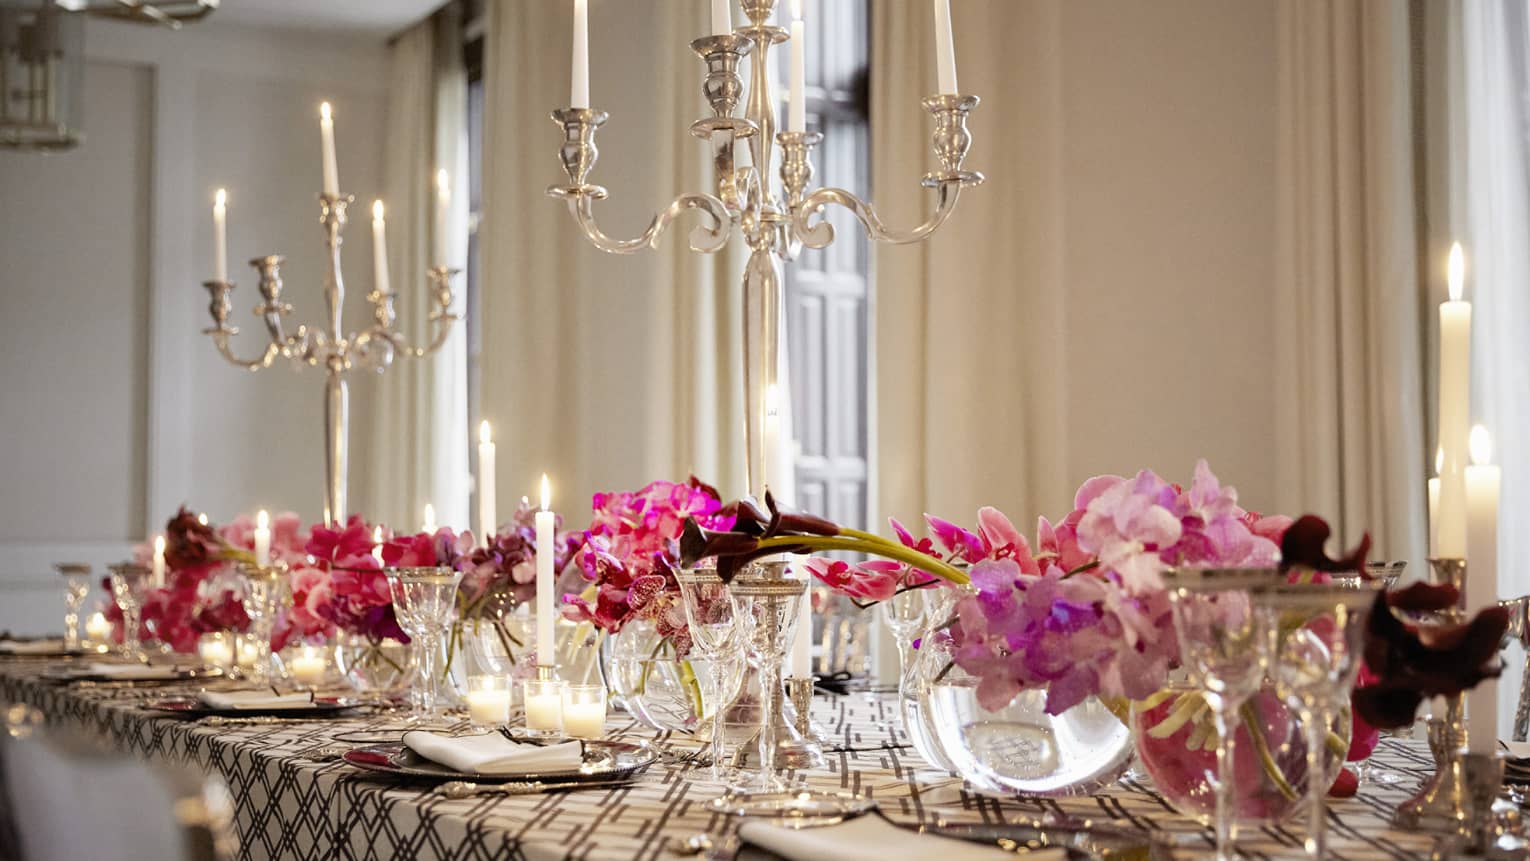 Sal�n Alcal� meeting room with elegantly set formal dining table, including candelabras and pink flower arrangements